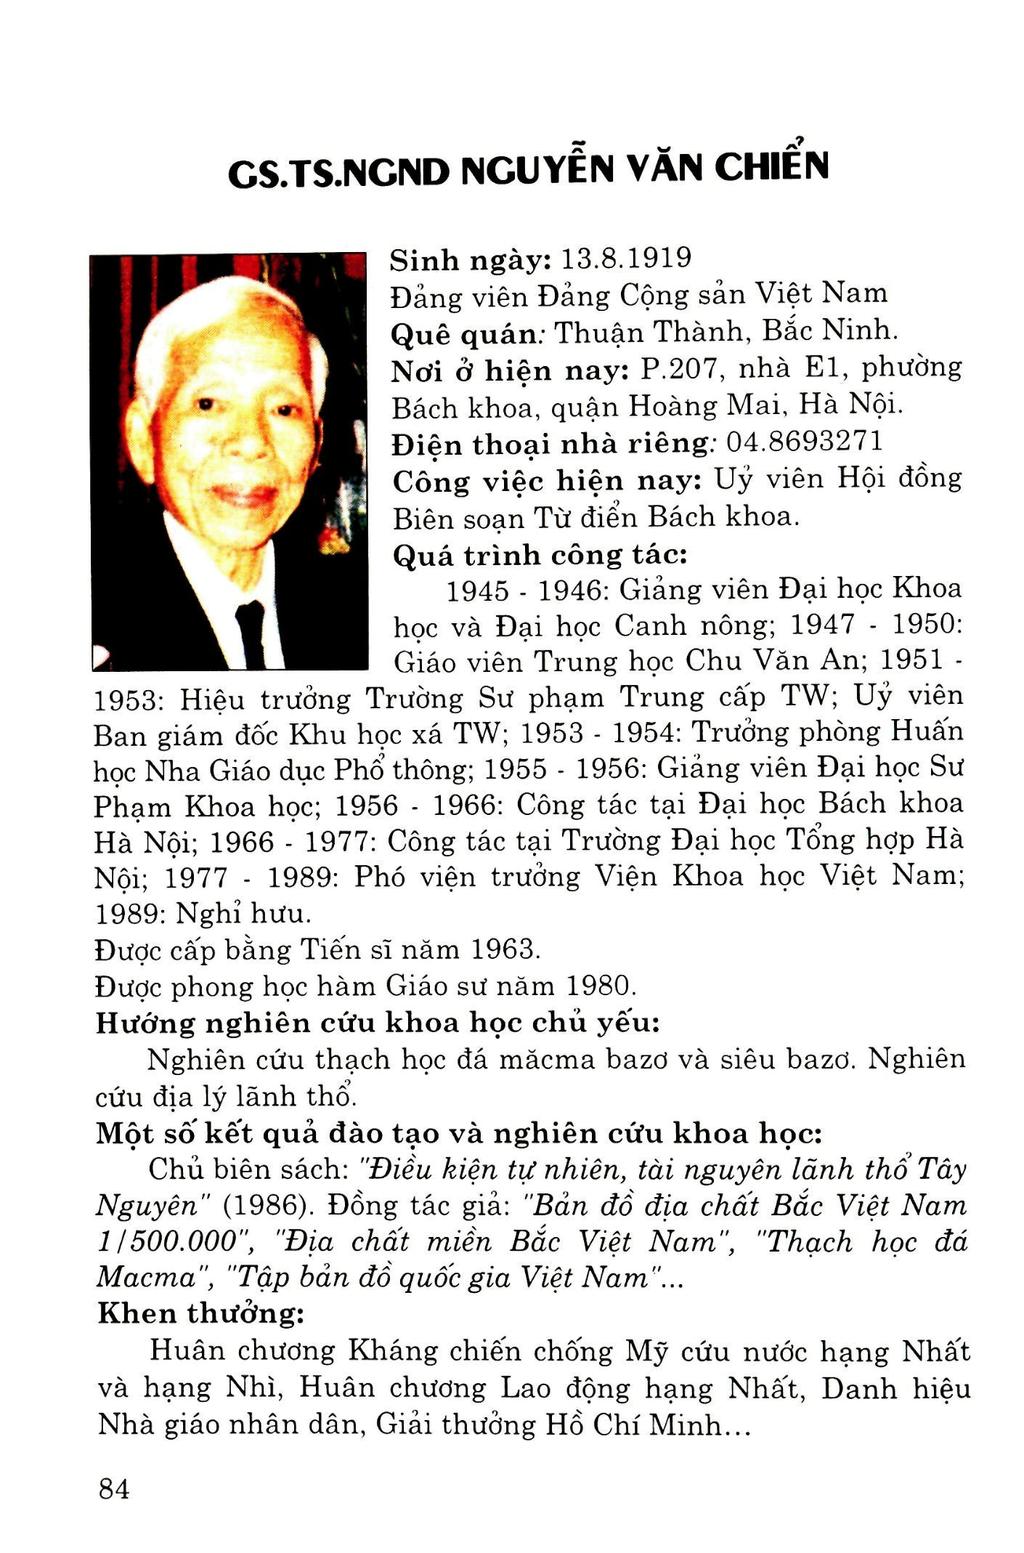 CS.TS.NCND NCUYIN VAN CHIEN Sinhngay: 13.8.1919 Dang vien Dang Cong san Viet Nam Que quan; Thuan Thanh, B^e Ninh. Ndi d hien nay: P.207, nha El, phudng Bach khoa, quan Hoang Mai, Ha Noi.